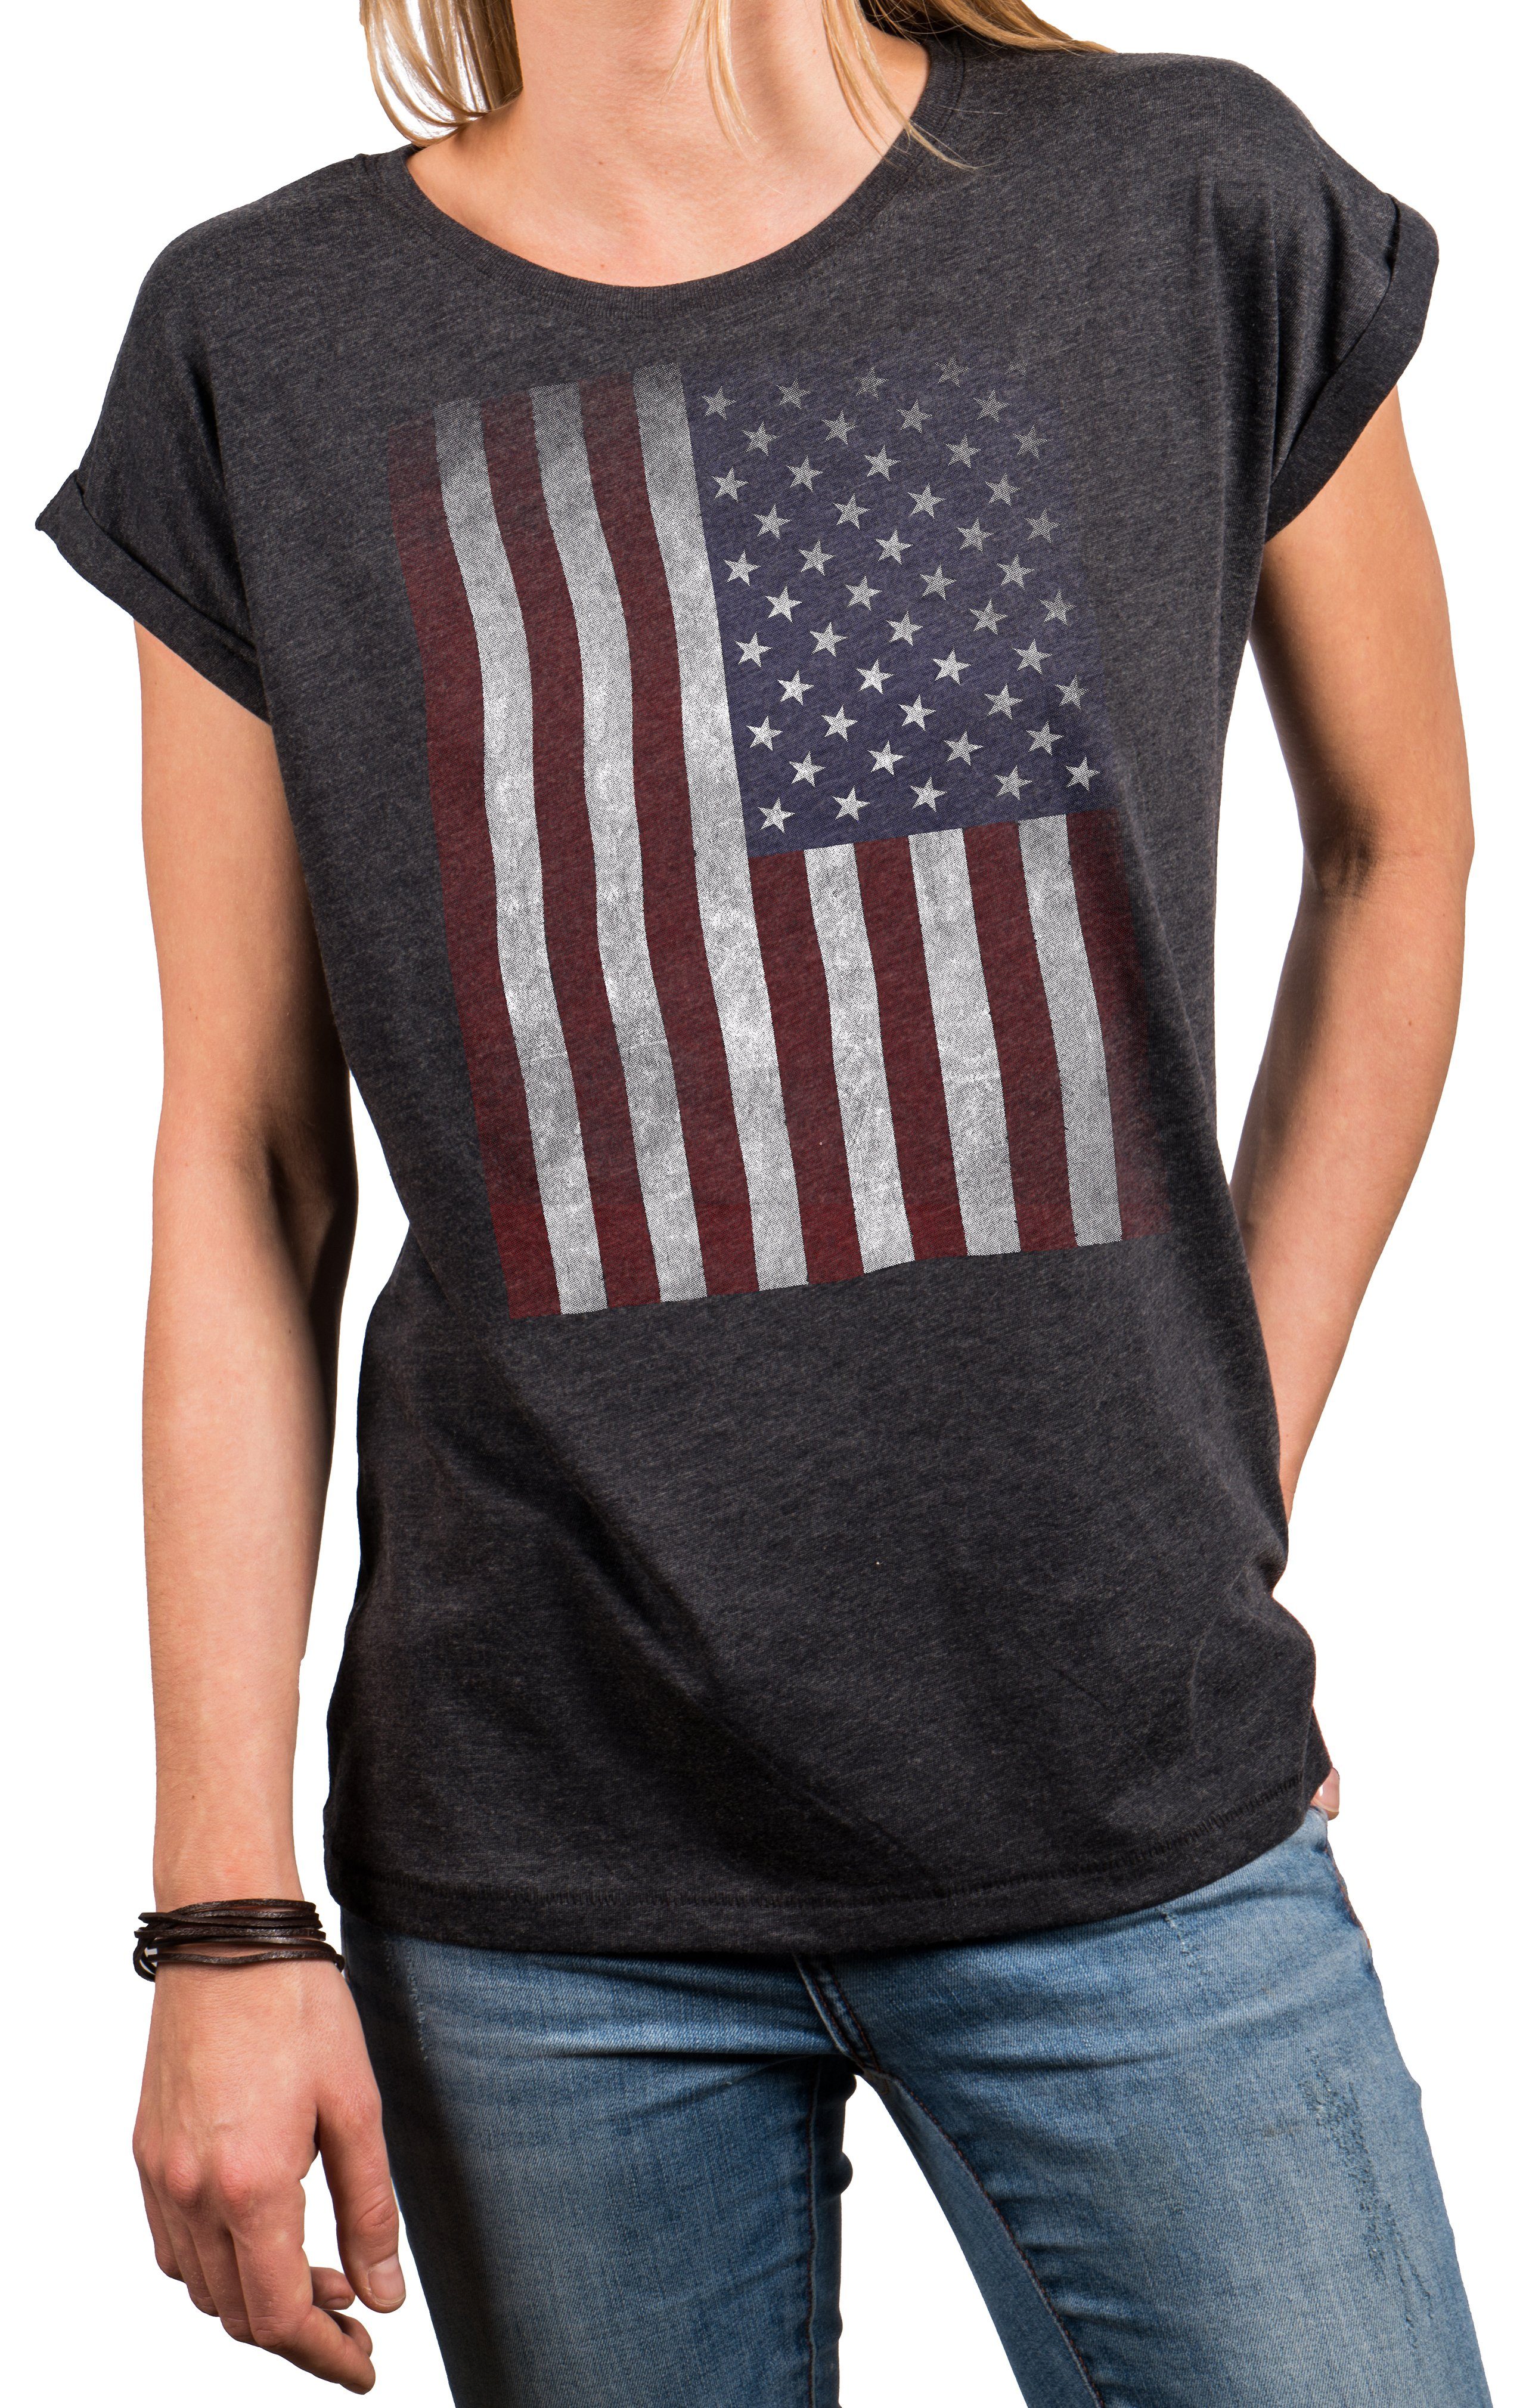 MAKAYA Print-Shirt Fahne Größen USA große Flagge Amerika Sommer Oberteile (Kurzarm, blau) grau, schwarz, Damen Baumwolle, Tunika Vintage Top